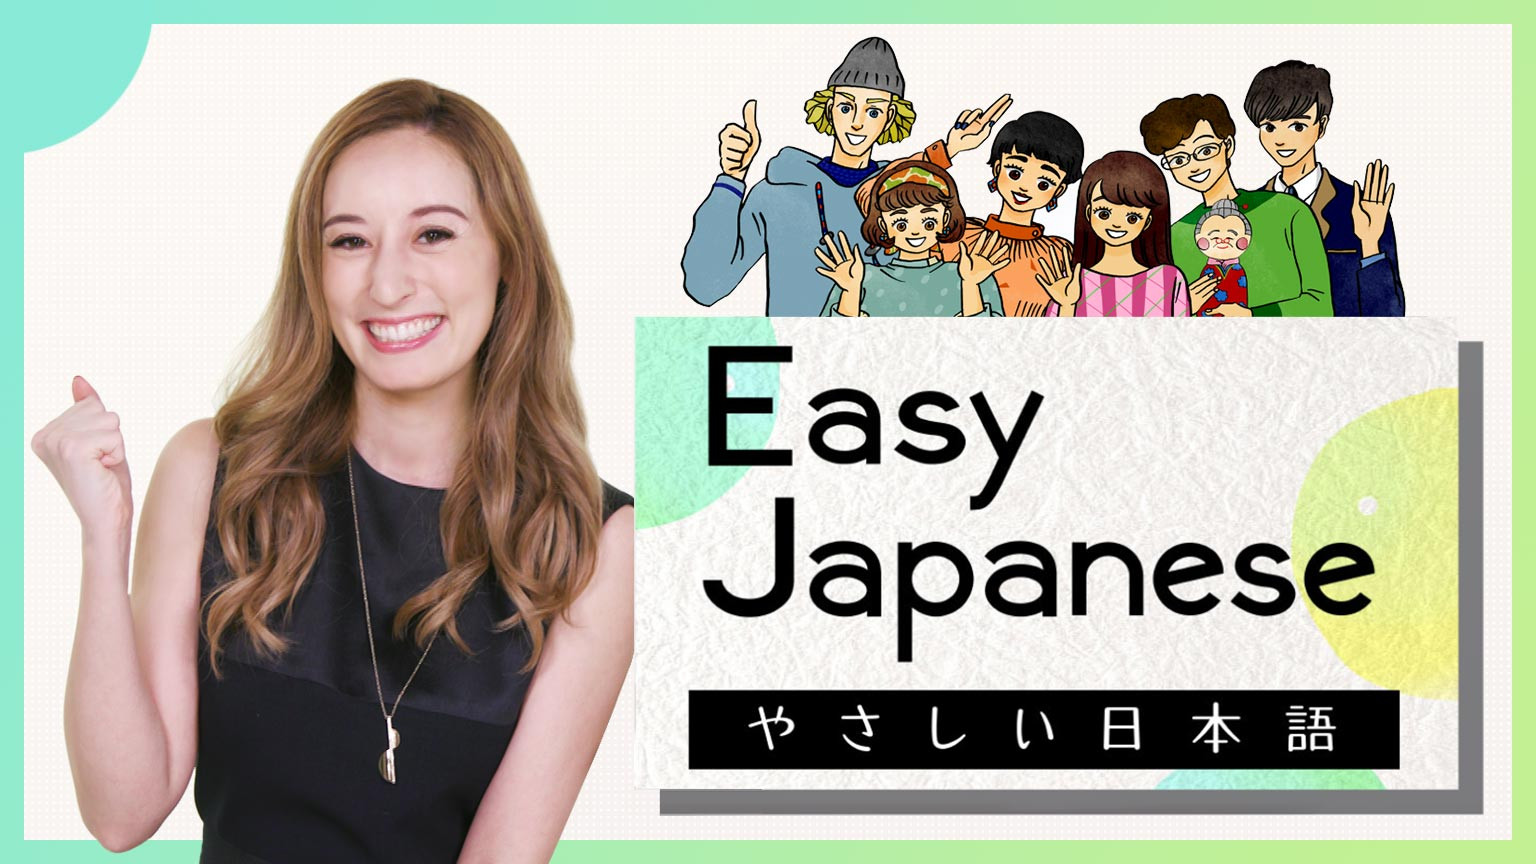 Cara Mudah Berbahasa Jepang
Easy Japanese